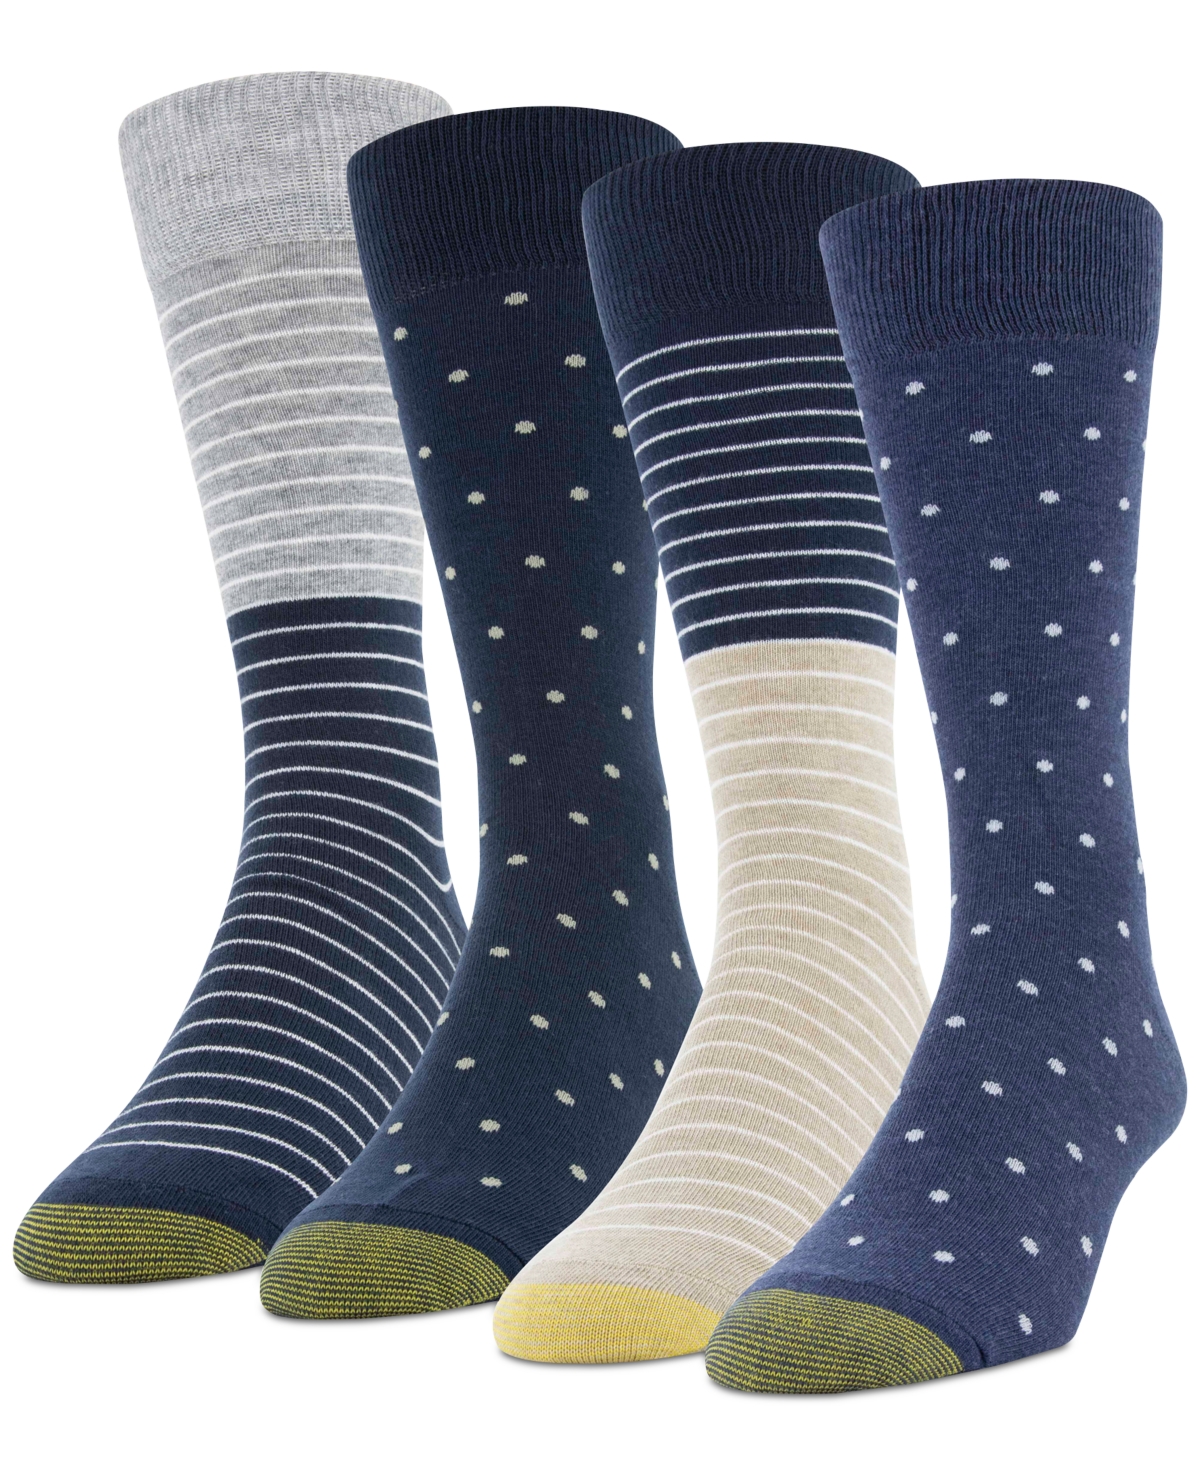 Men's 4-Pack Casual Dot Stripe Crew Socks - Denim, New Navy, New Navy, Grey Heather